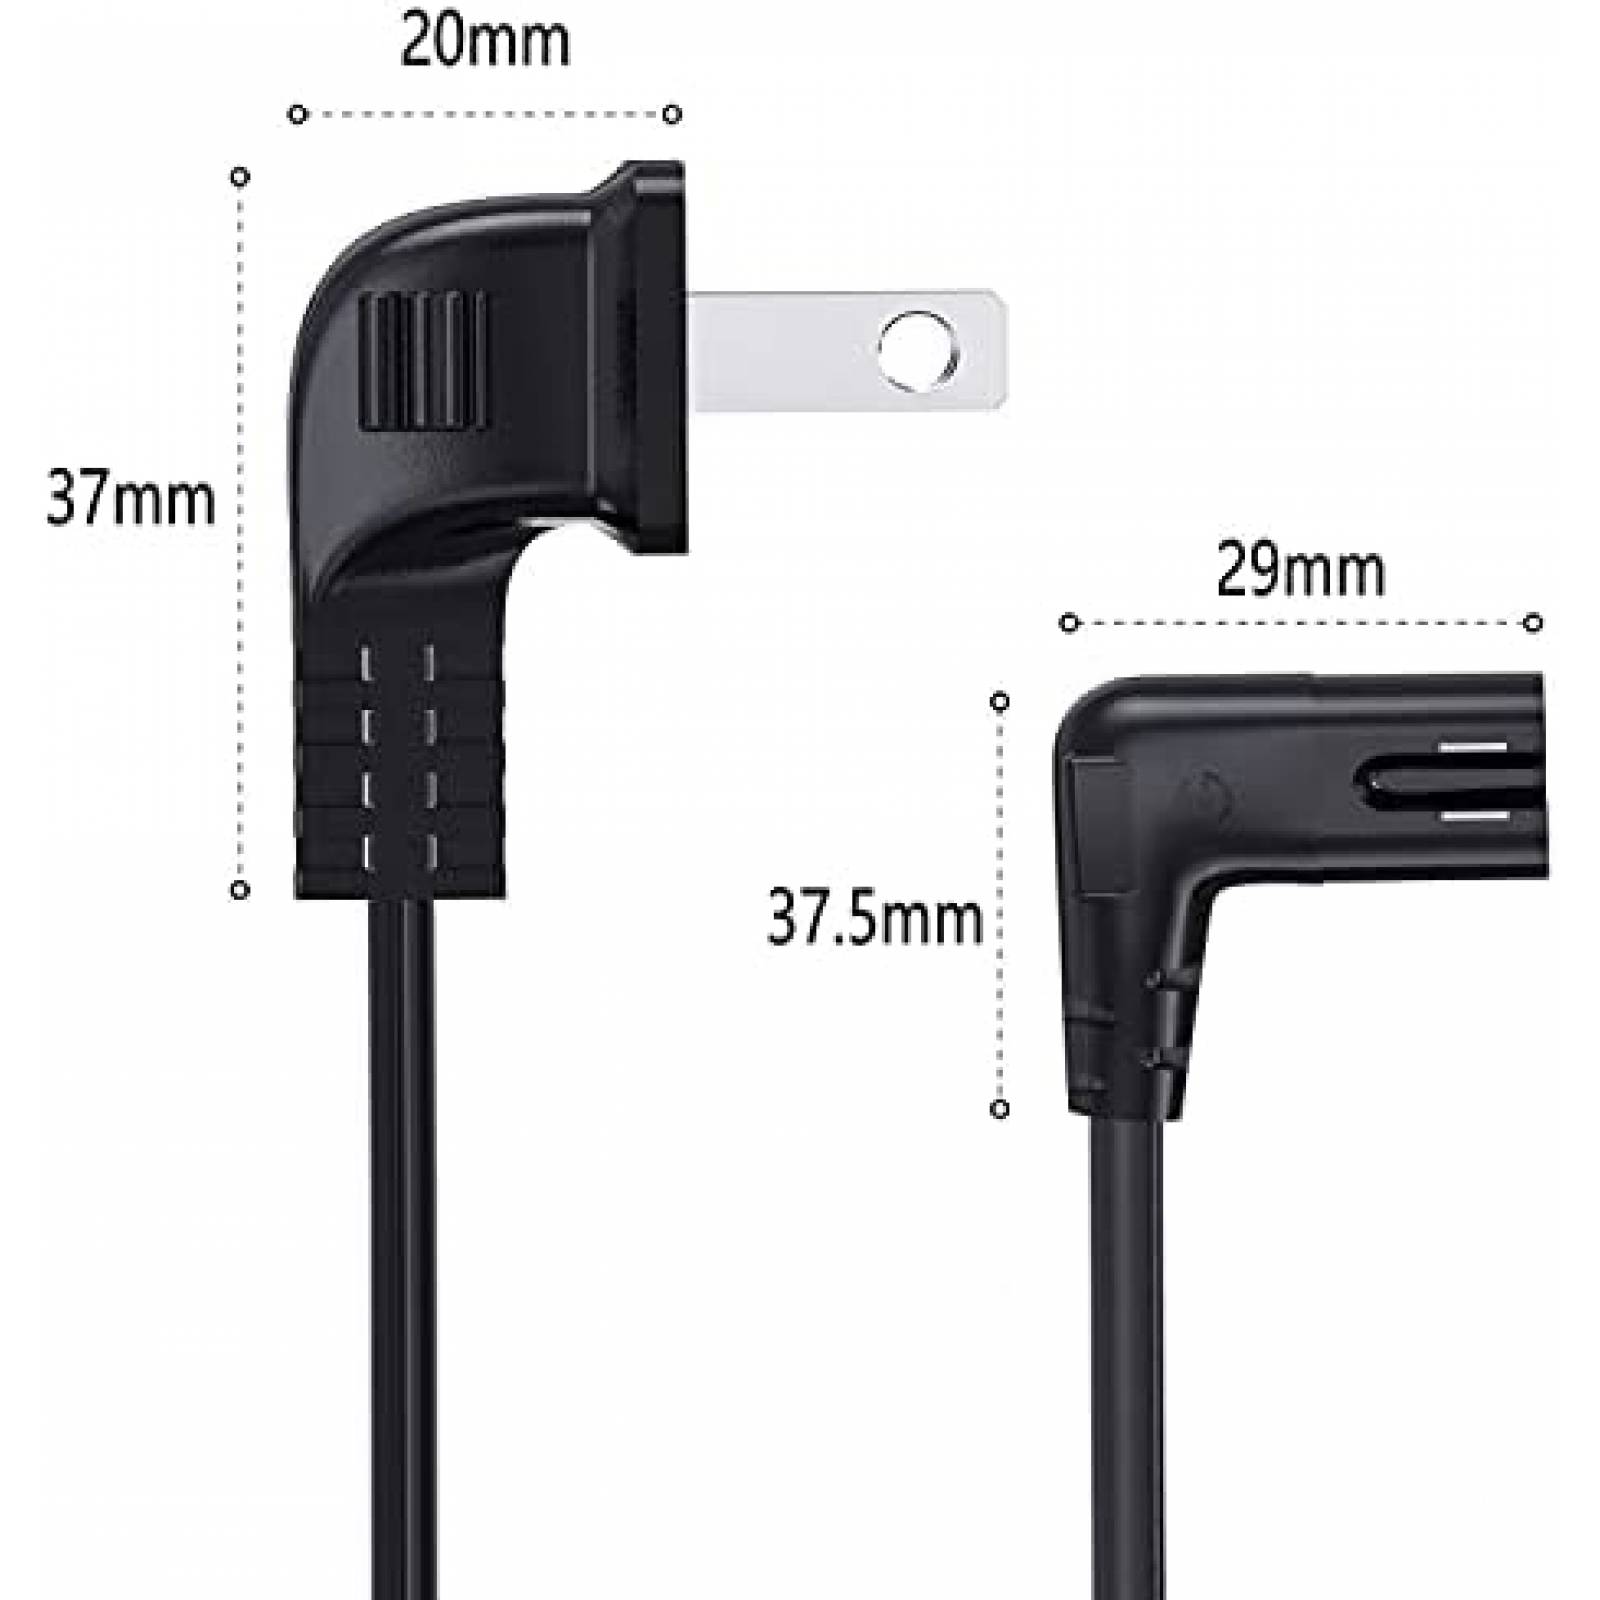  Ancable - Cable de alimentación para TV, 6 pies, 18 AWG, 90  grados, 2 clavijas a forma de L, cable de alimentación C7 para Samsung  Philips, Toshiba, LG, Sony, Sharp, Panasonic